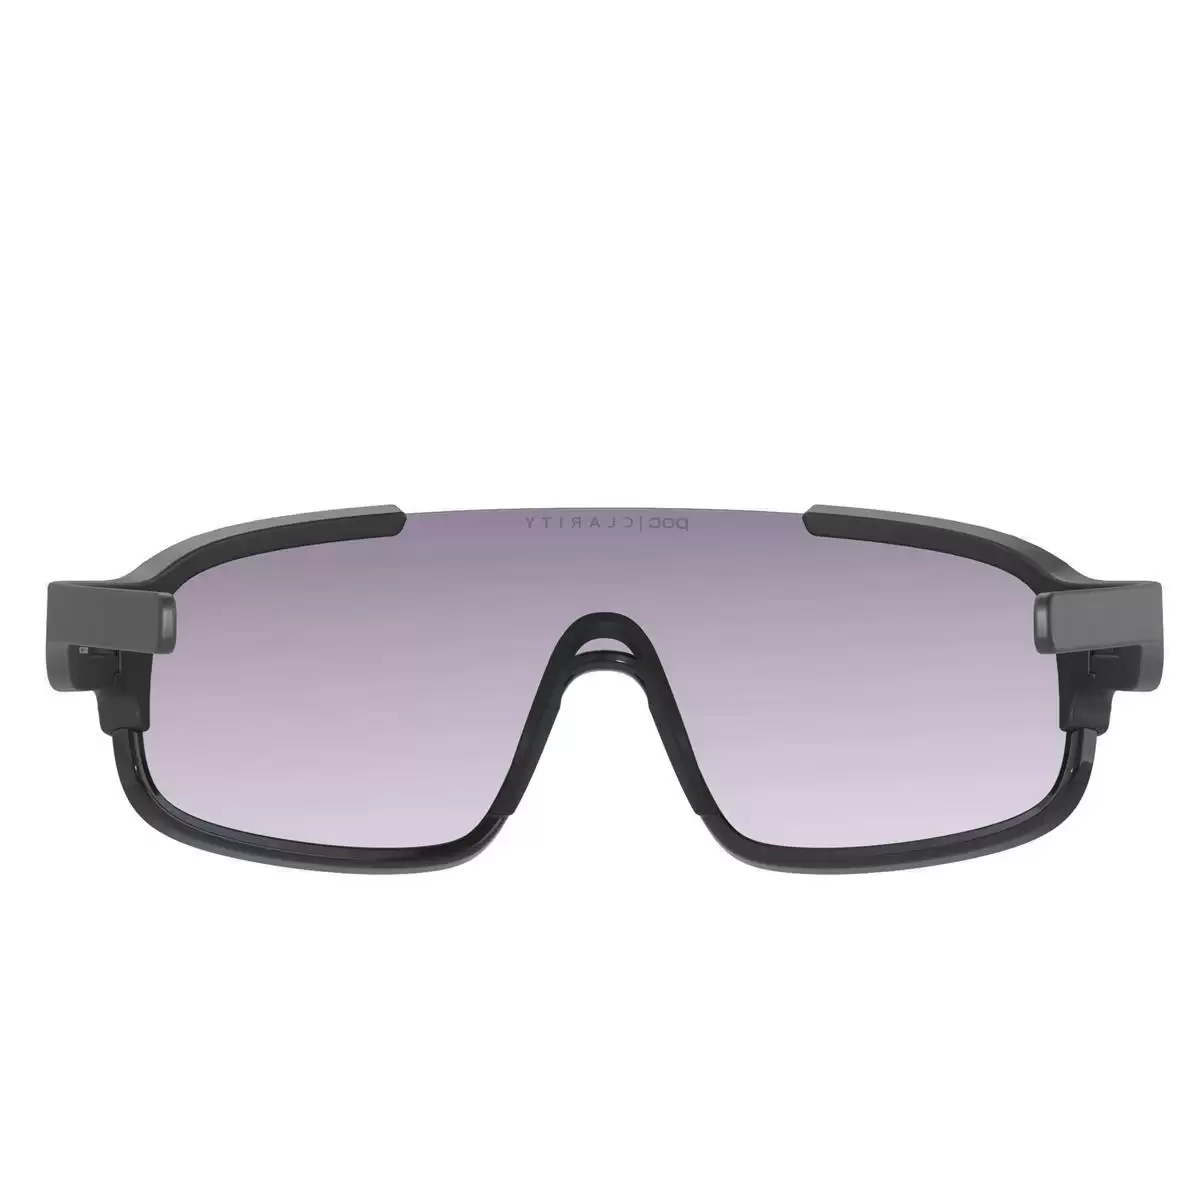 Sunglasses Crave Uranium black lens clarity Violet / Silver #3